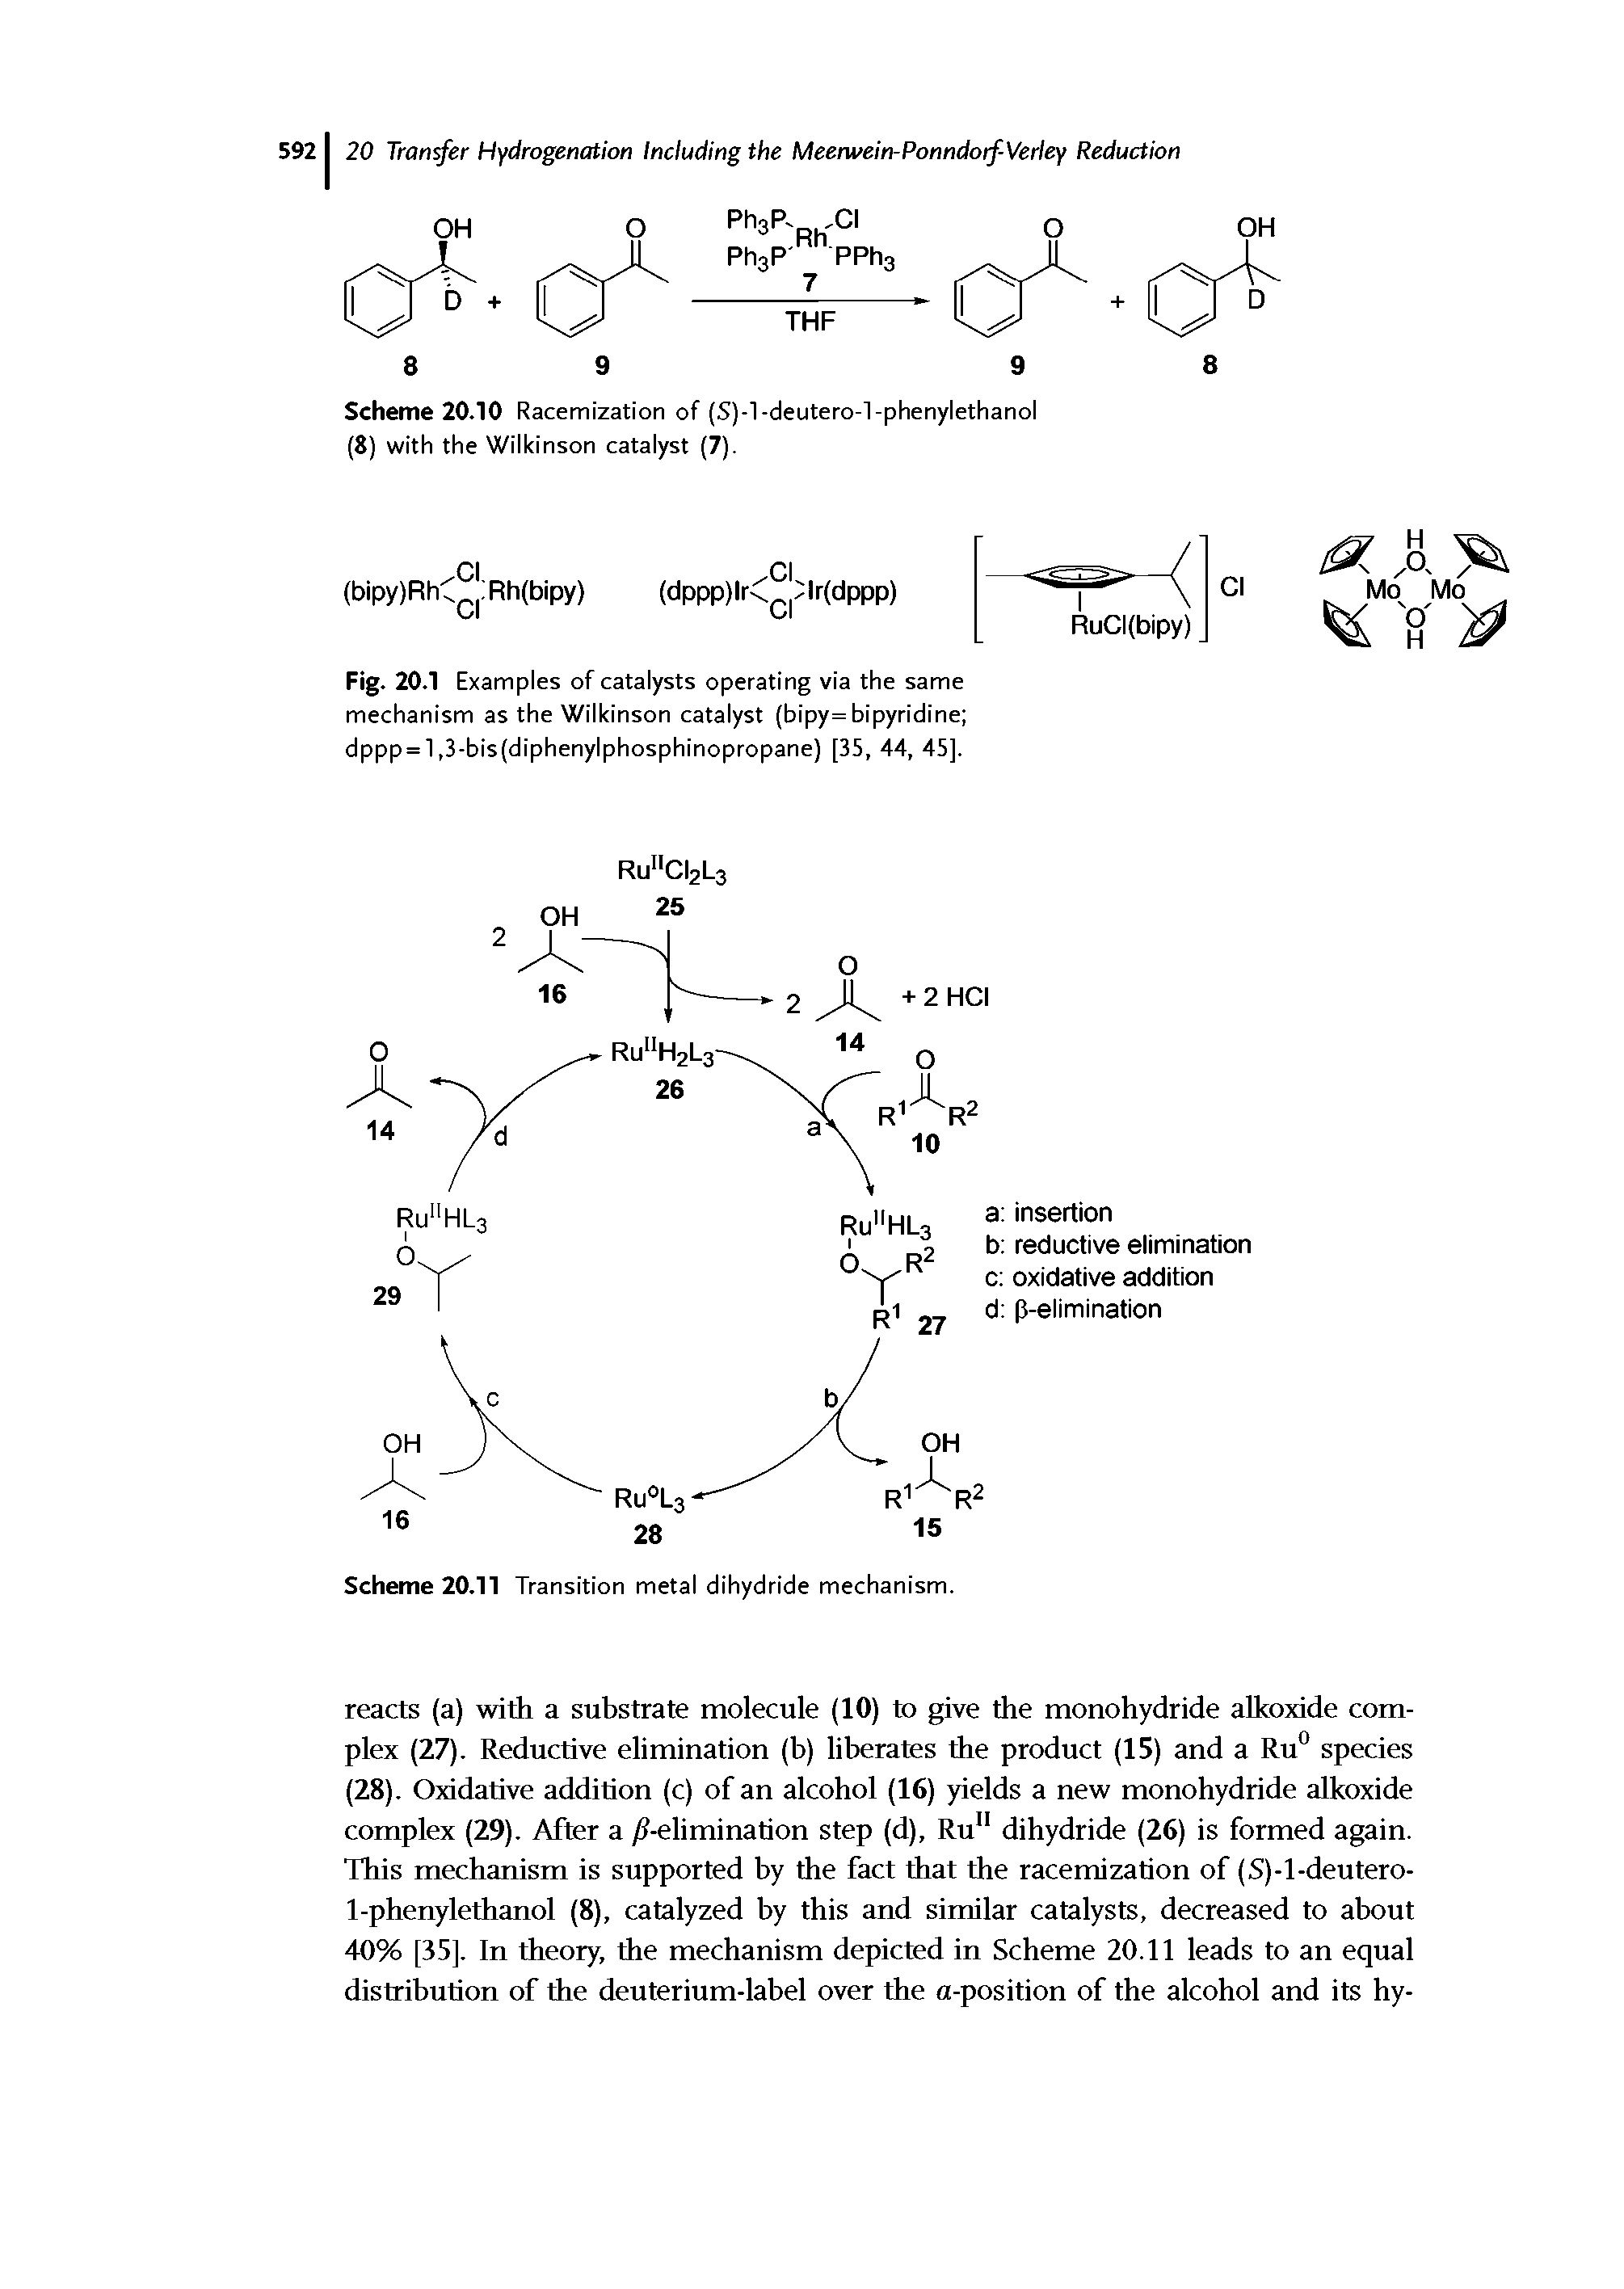 Scheme 20.10 Racemization of (S)-l-deutero-l-phenylethanol (8) with the Wilkinson catalyst (7).